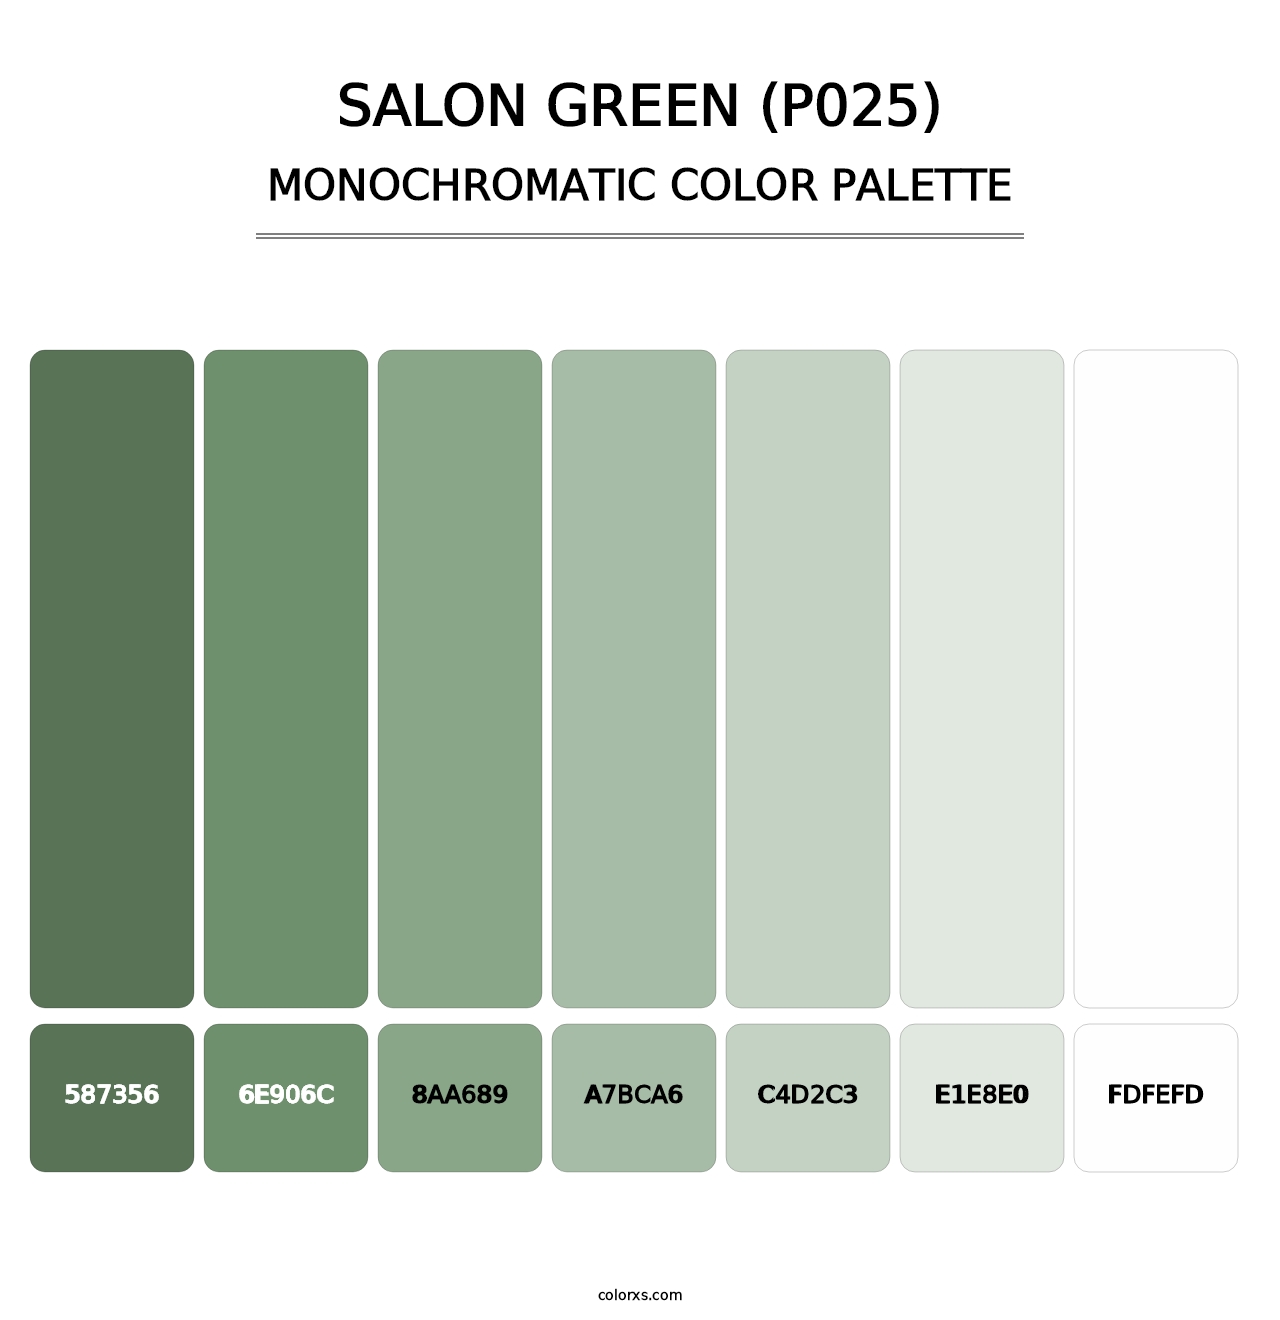 Salon Green (P025) - Monochromatic Color Palette